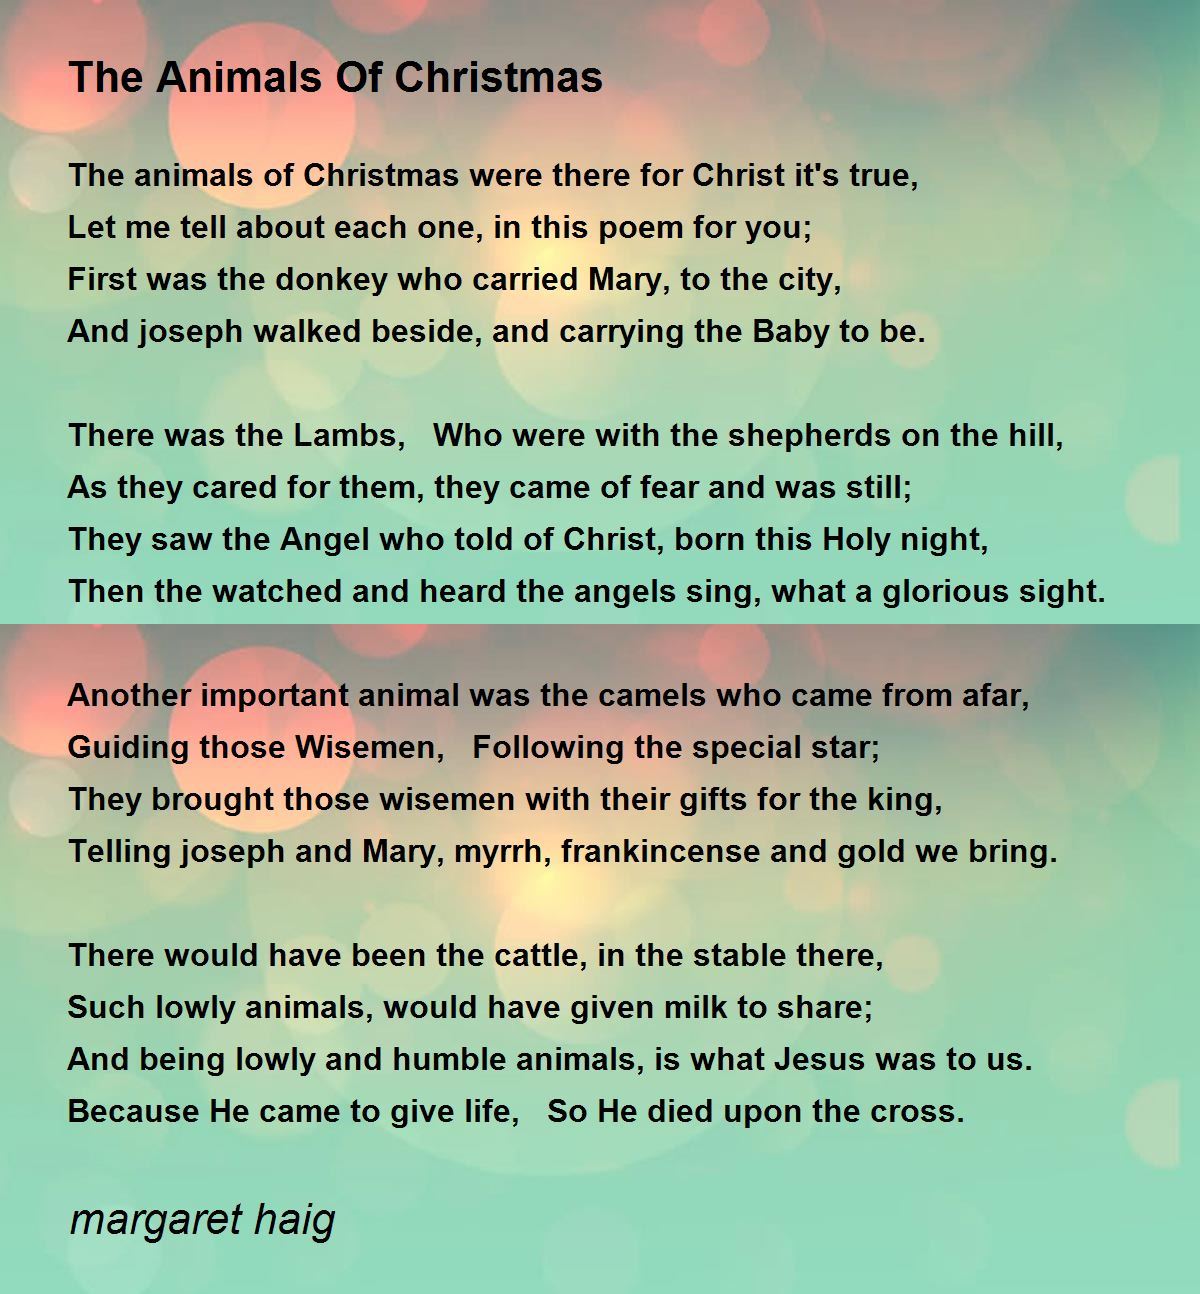 The Animals Of Christmas - The Animals Of Christmas Poem by margaret haig